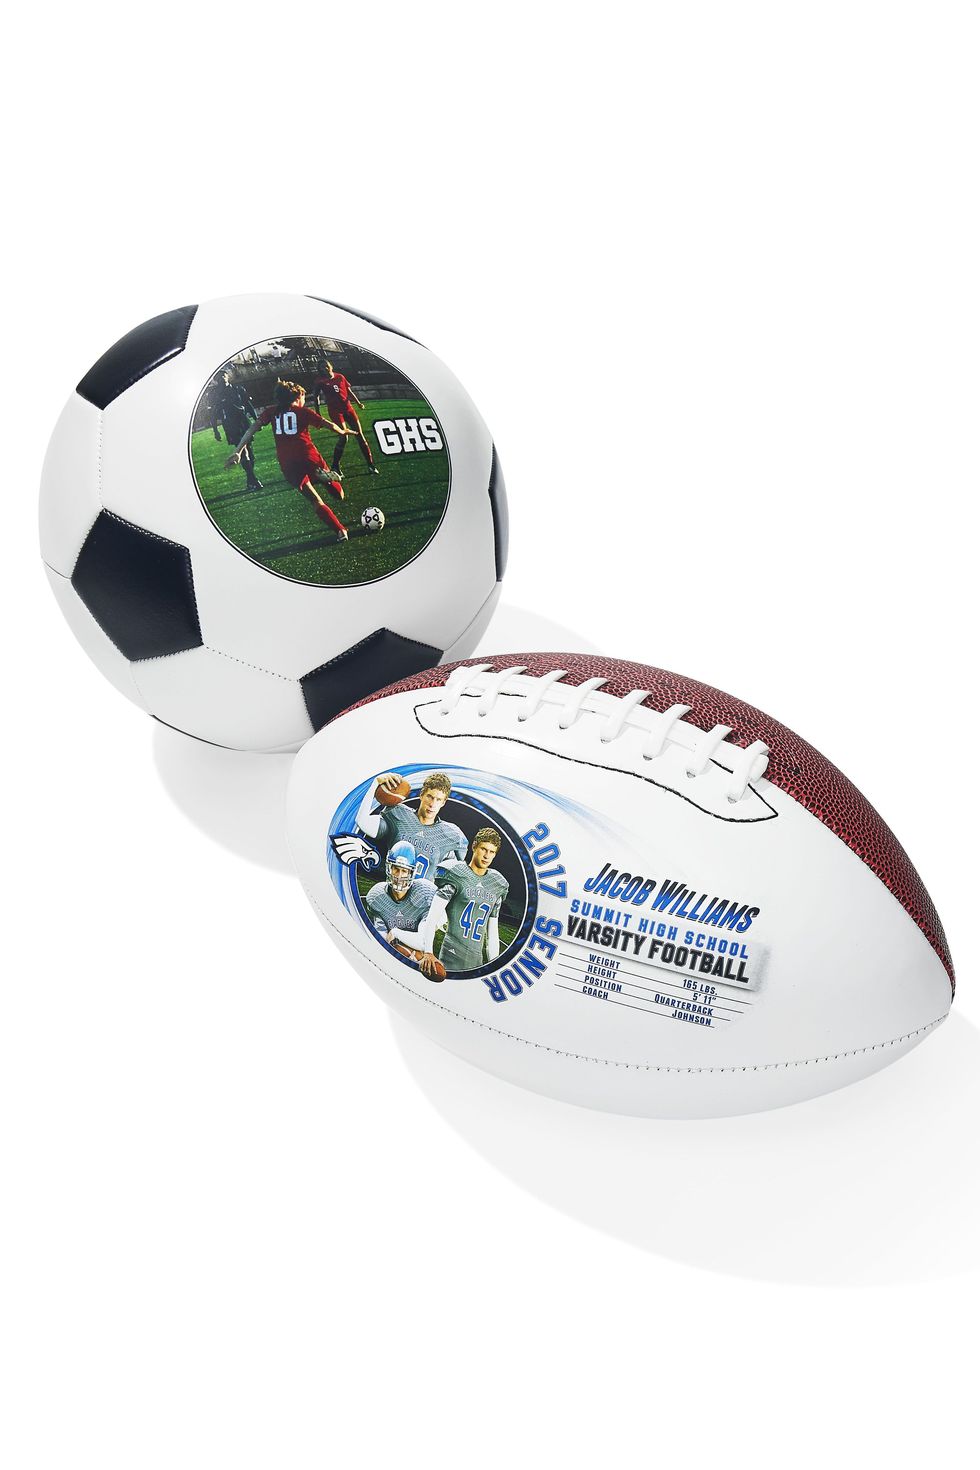 PhotoBall Full-Size Soccer Ball and Football